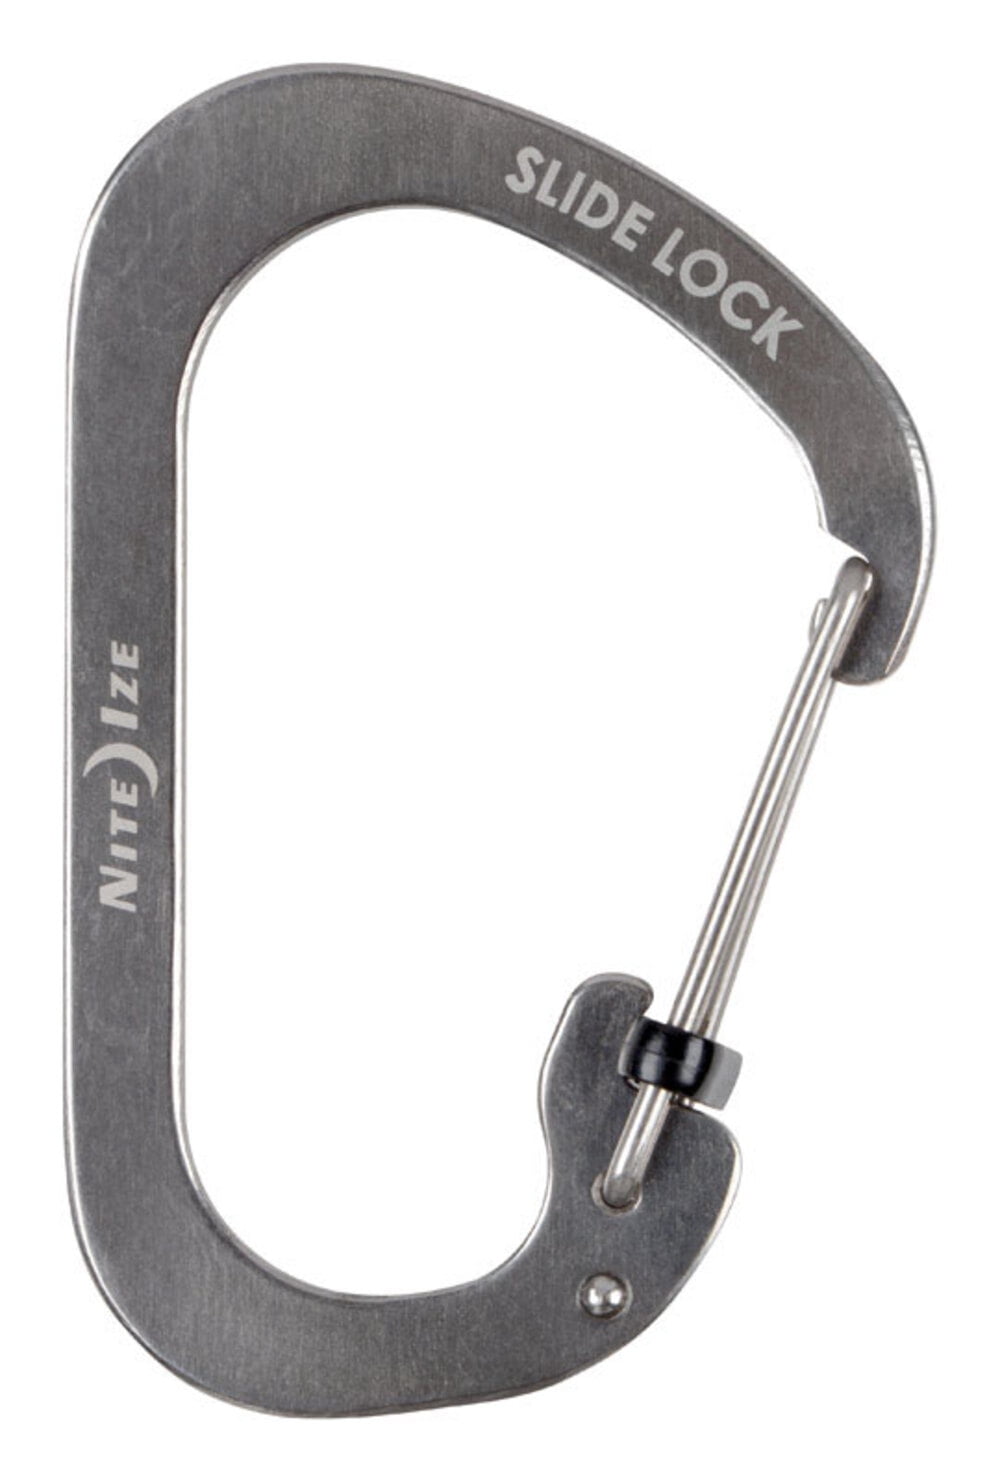 Black Grey Small Carabiner Snap Spring Loaded Clip Hook Metal Steel Alloy Karabiner Lock Mini Tiny Carabina Silver